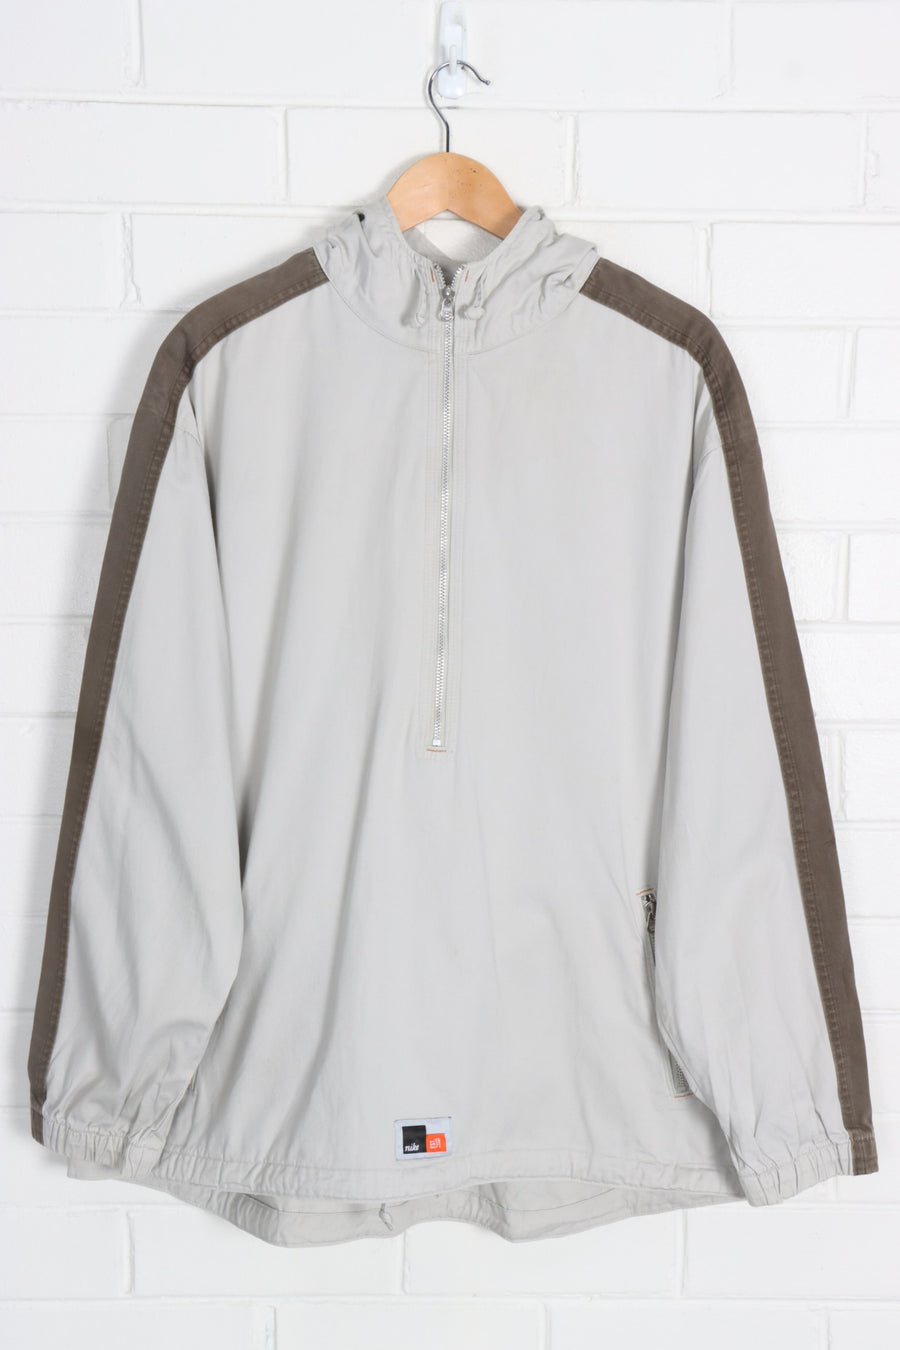 NIKE Grey & Brown Sleeve Stripe Hooded Jacket (XXXL)